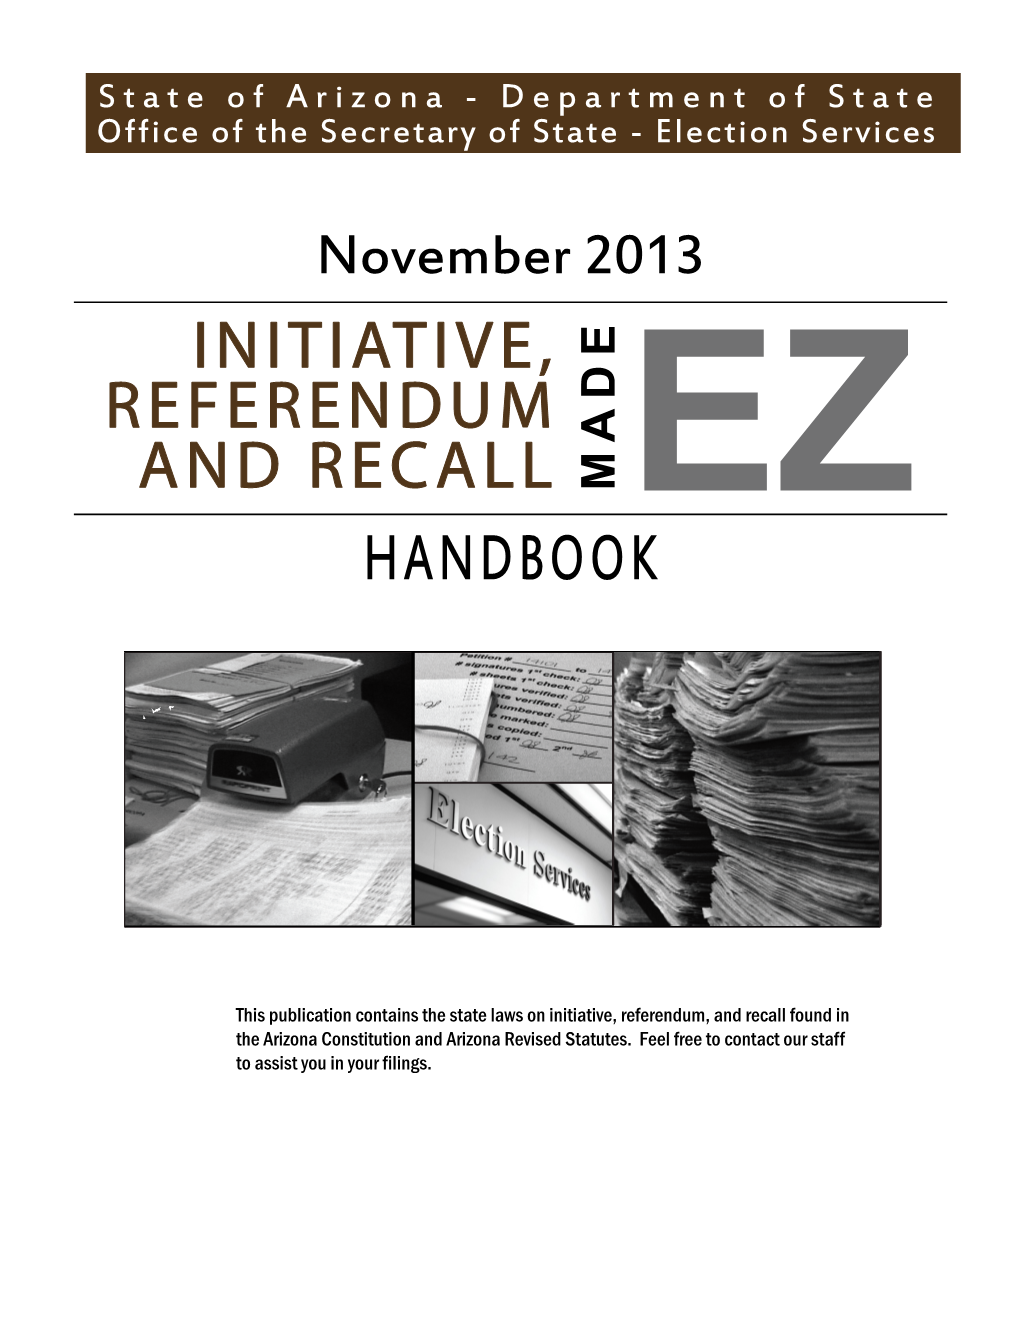 Secretary of State Initiative, Referendum and Recall Handbook